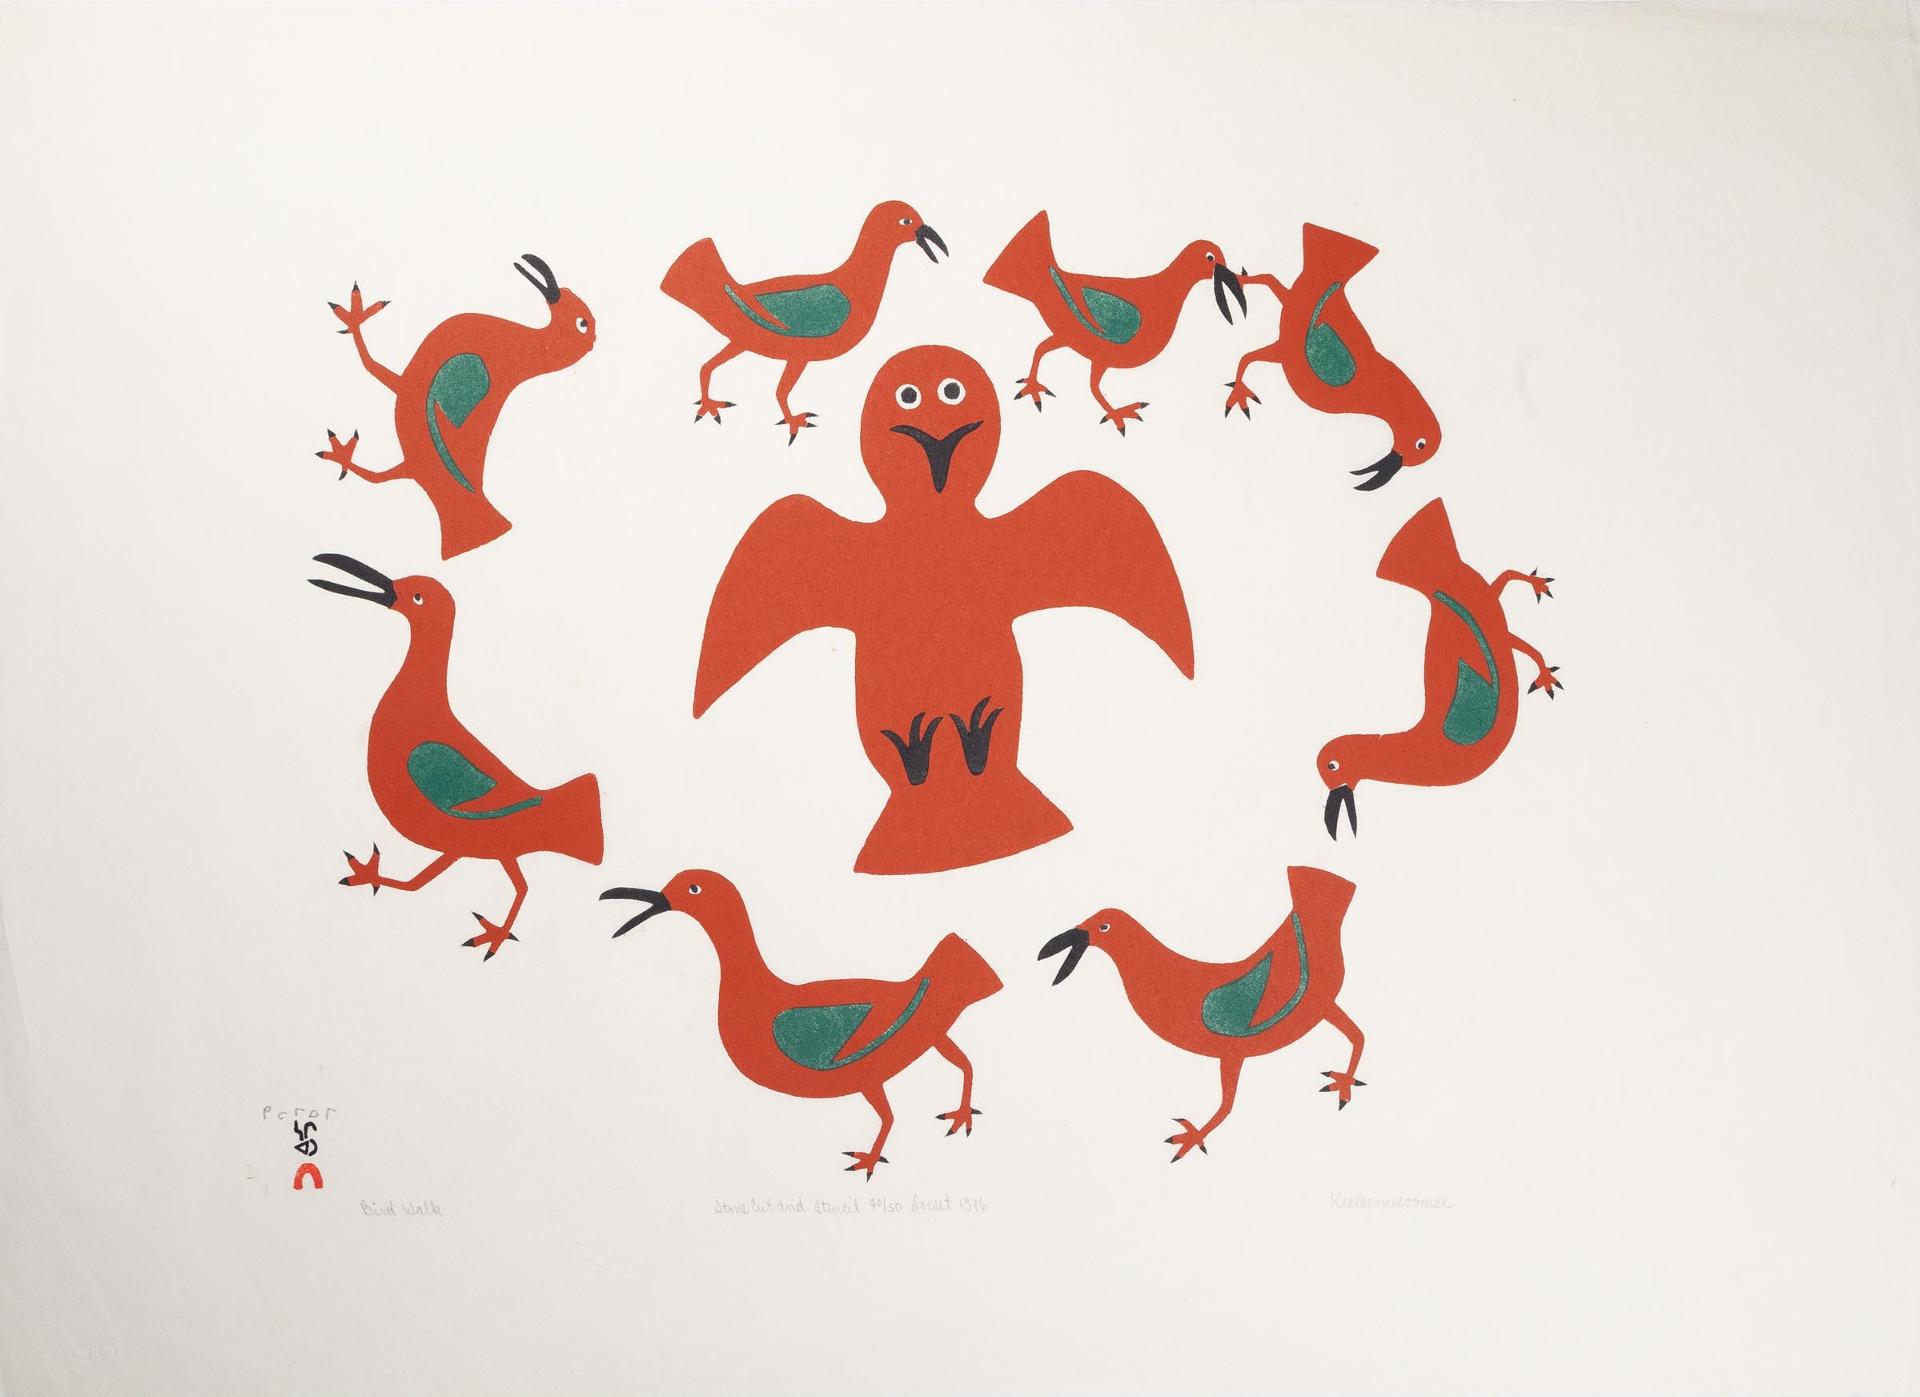 Keeleemeeoomee Samualie (1919-1983) - Bird Walk, 1976